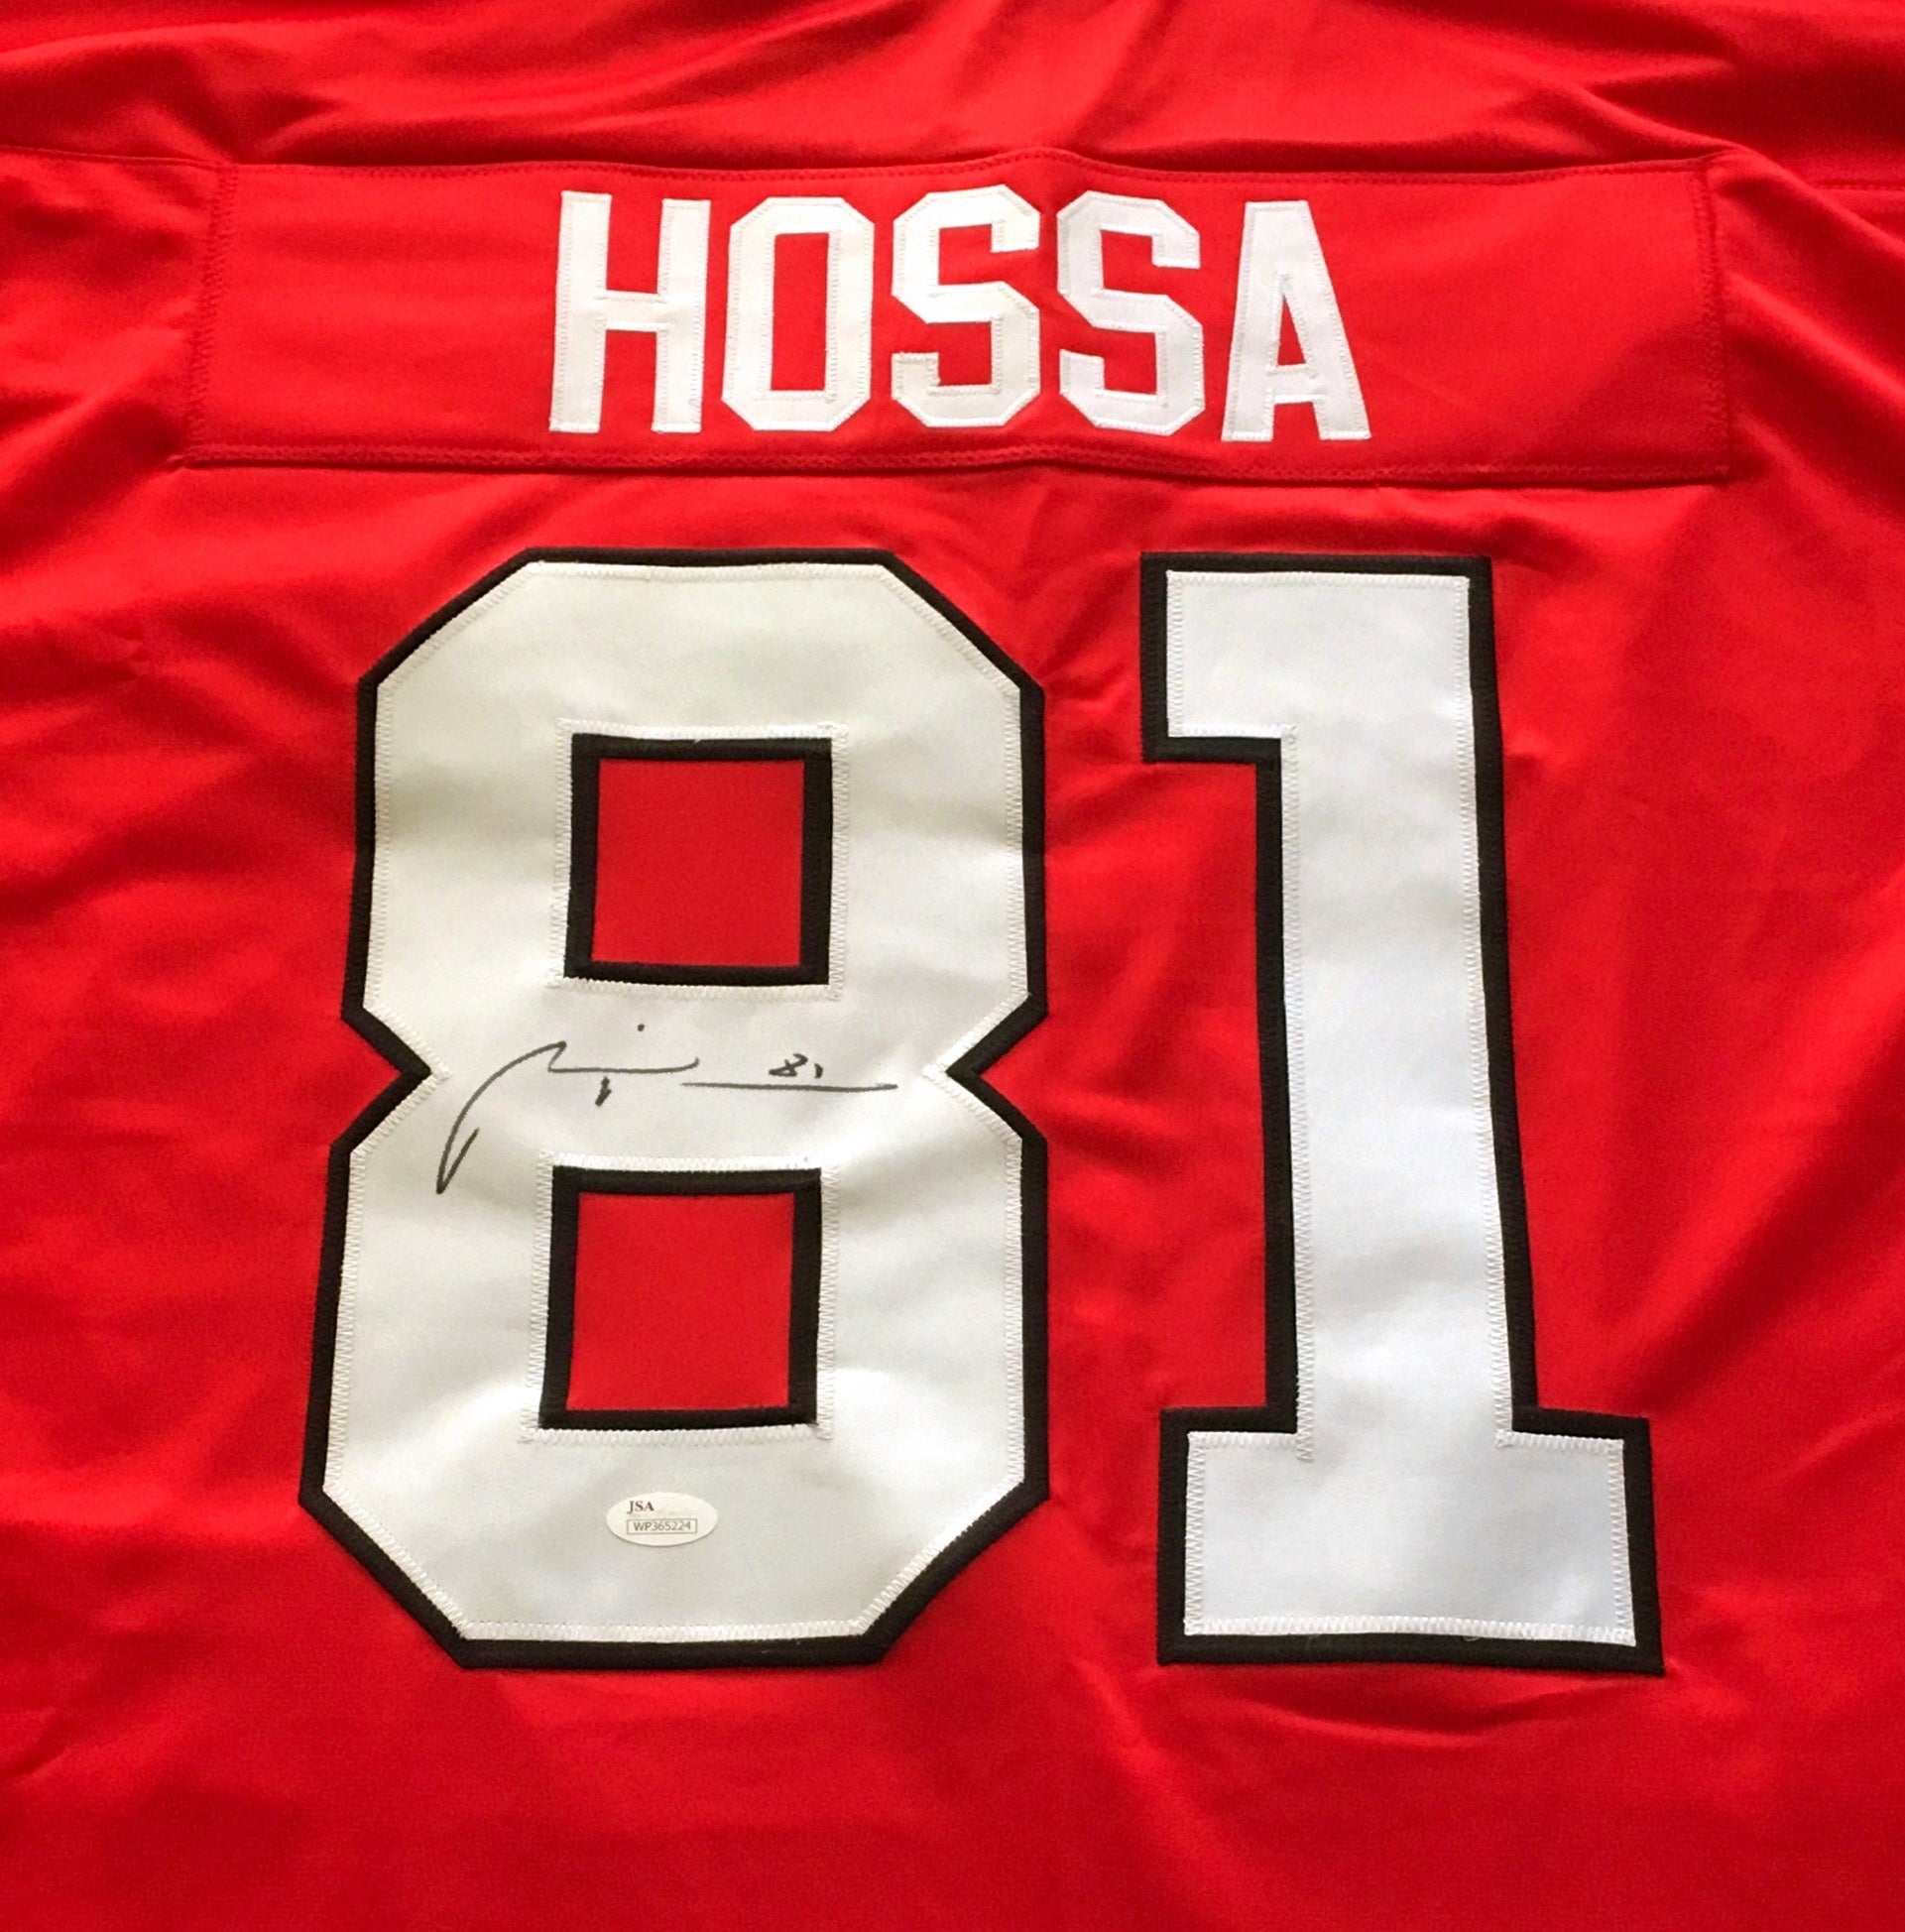 Marian Hossa Chicago Blackhawks Adidas Authentic Away NHL Hockey Jerse –